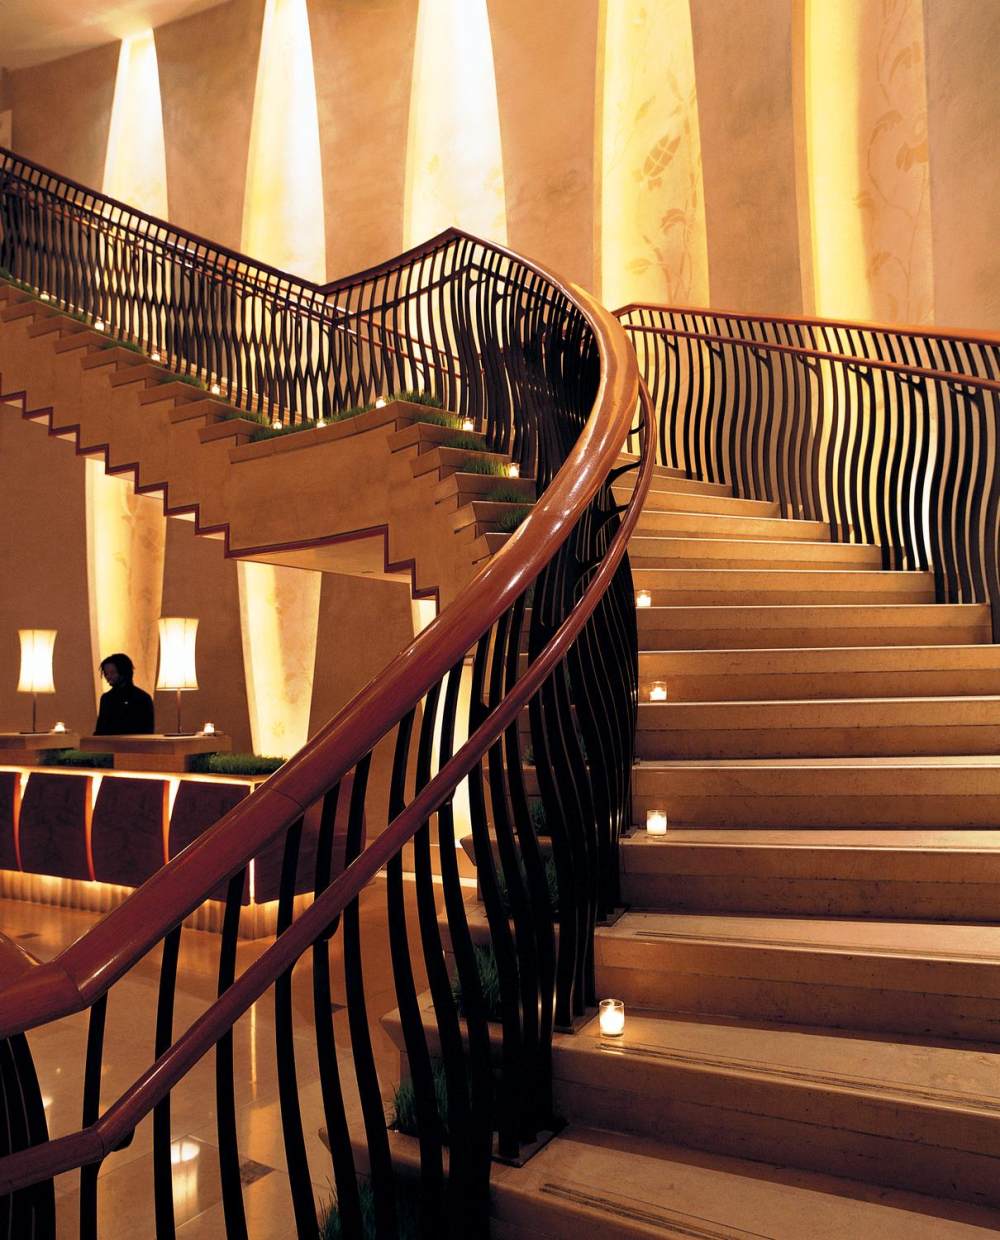 W New York  Union Square纽约联合广场 W 酒店_22)W New York - Union Square—Living as Art Stairways to the Great Room 拍攝者.jpg